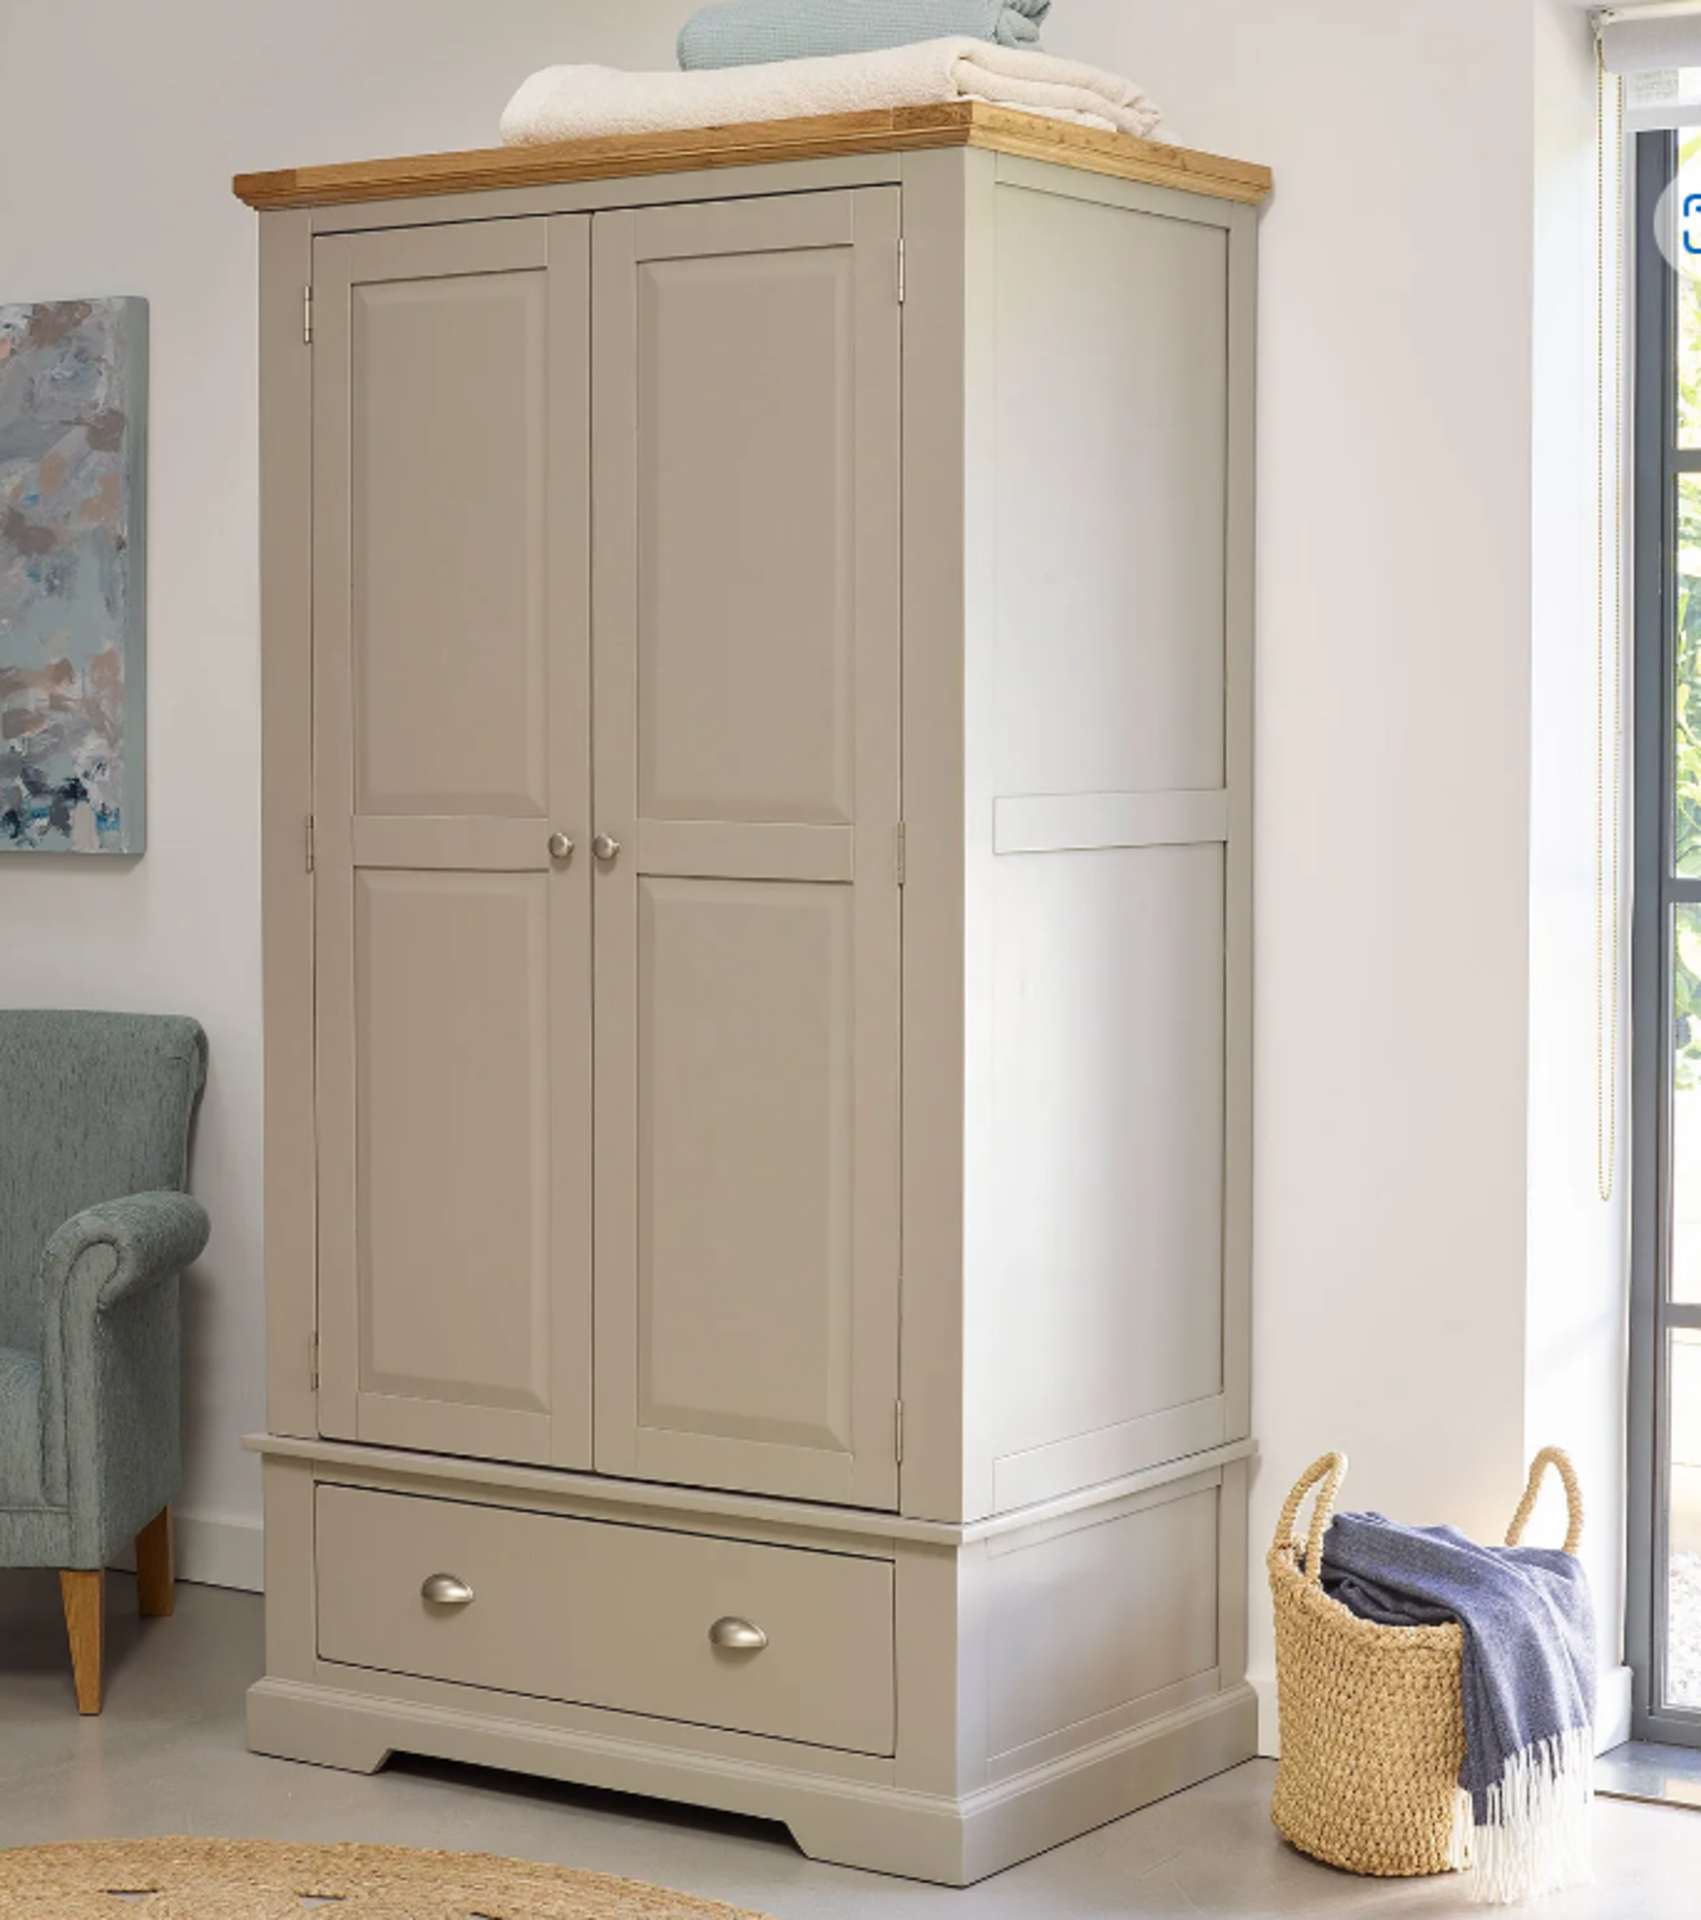 ST. IVES Natural Solid Oak & Grey Paint Double Wardrobe. RRP £959.99. The St Ives double wardrobe is